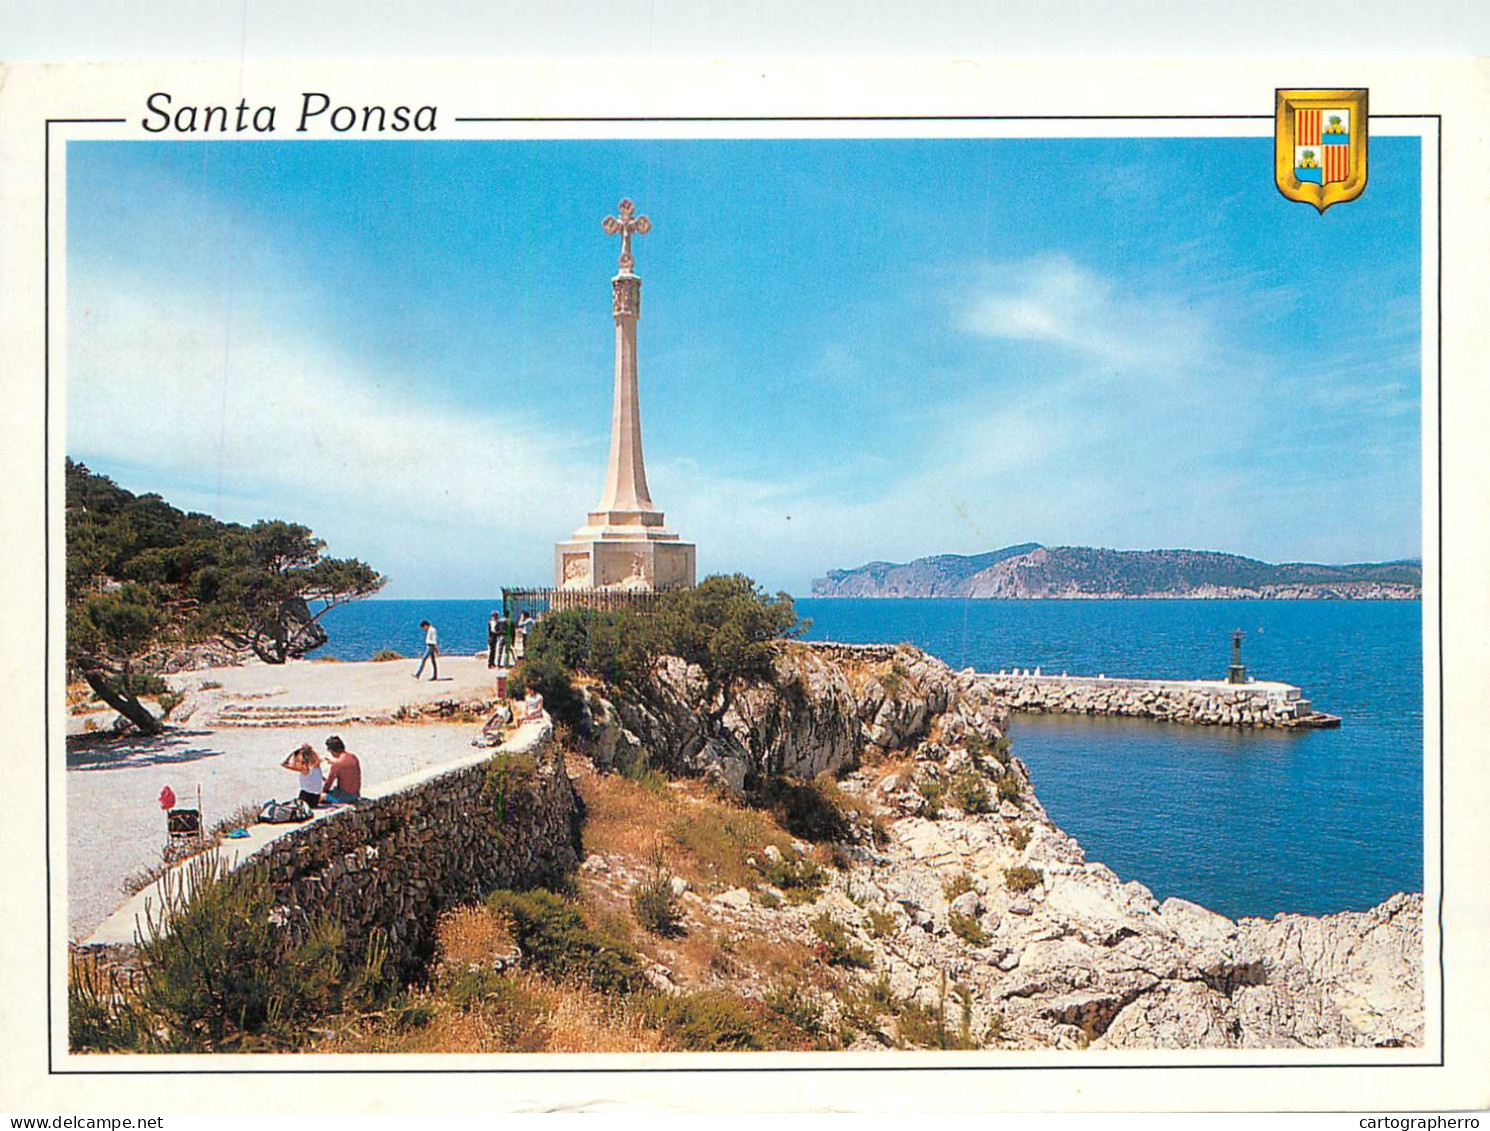 Navigation Sailing Vessels & Boats Themed Postcard Santa Ponsa - Veleros